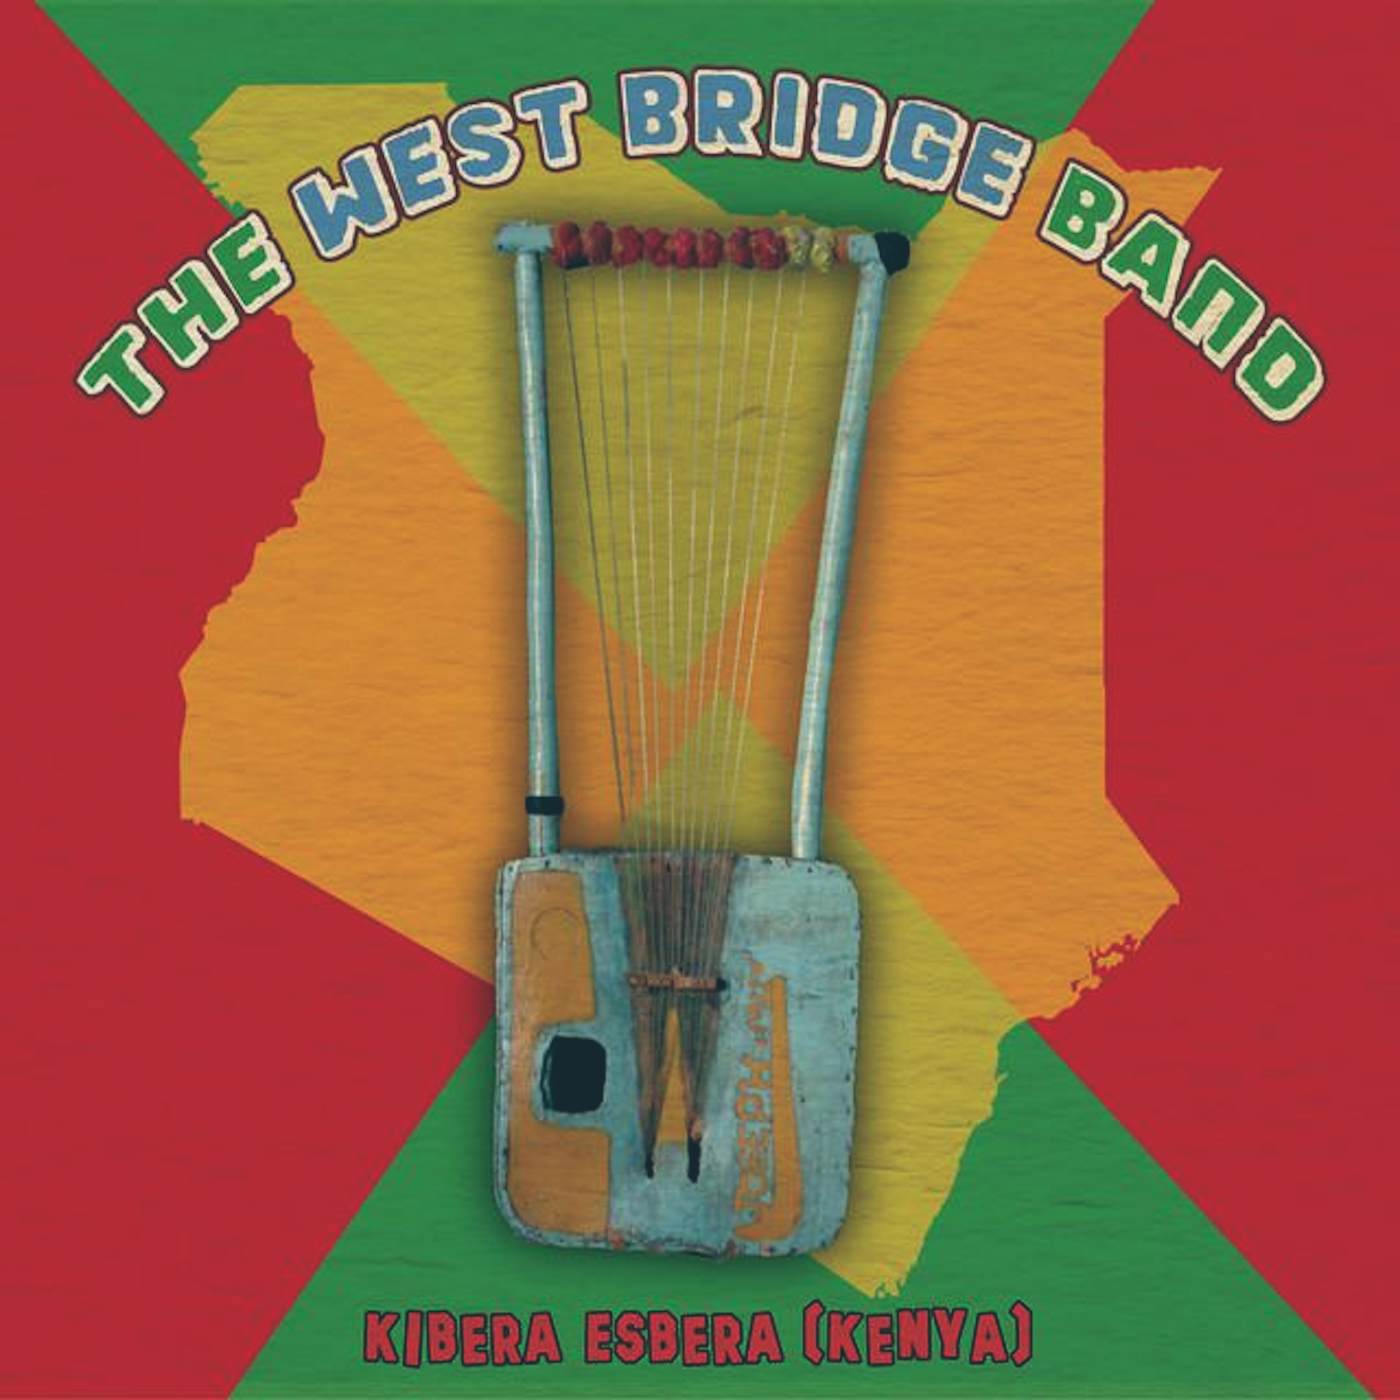 The West Bridge Band